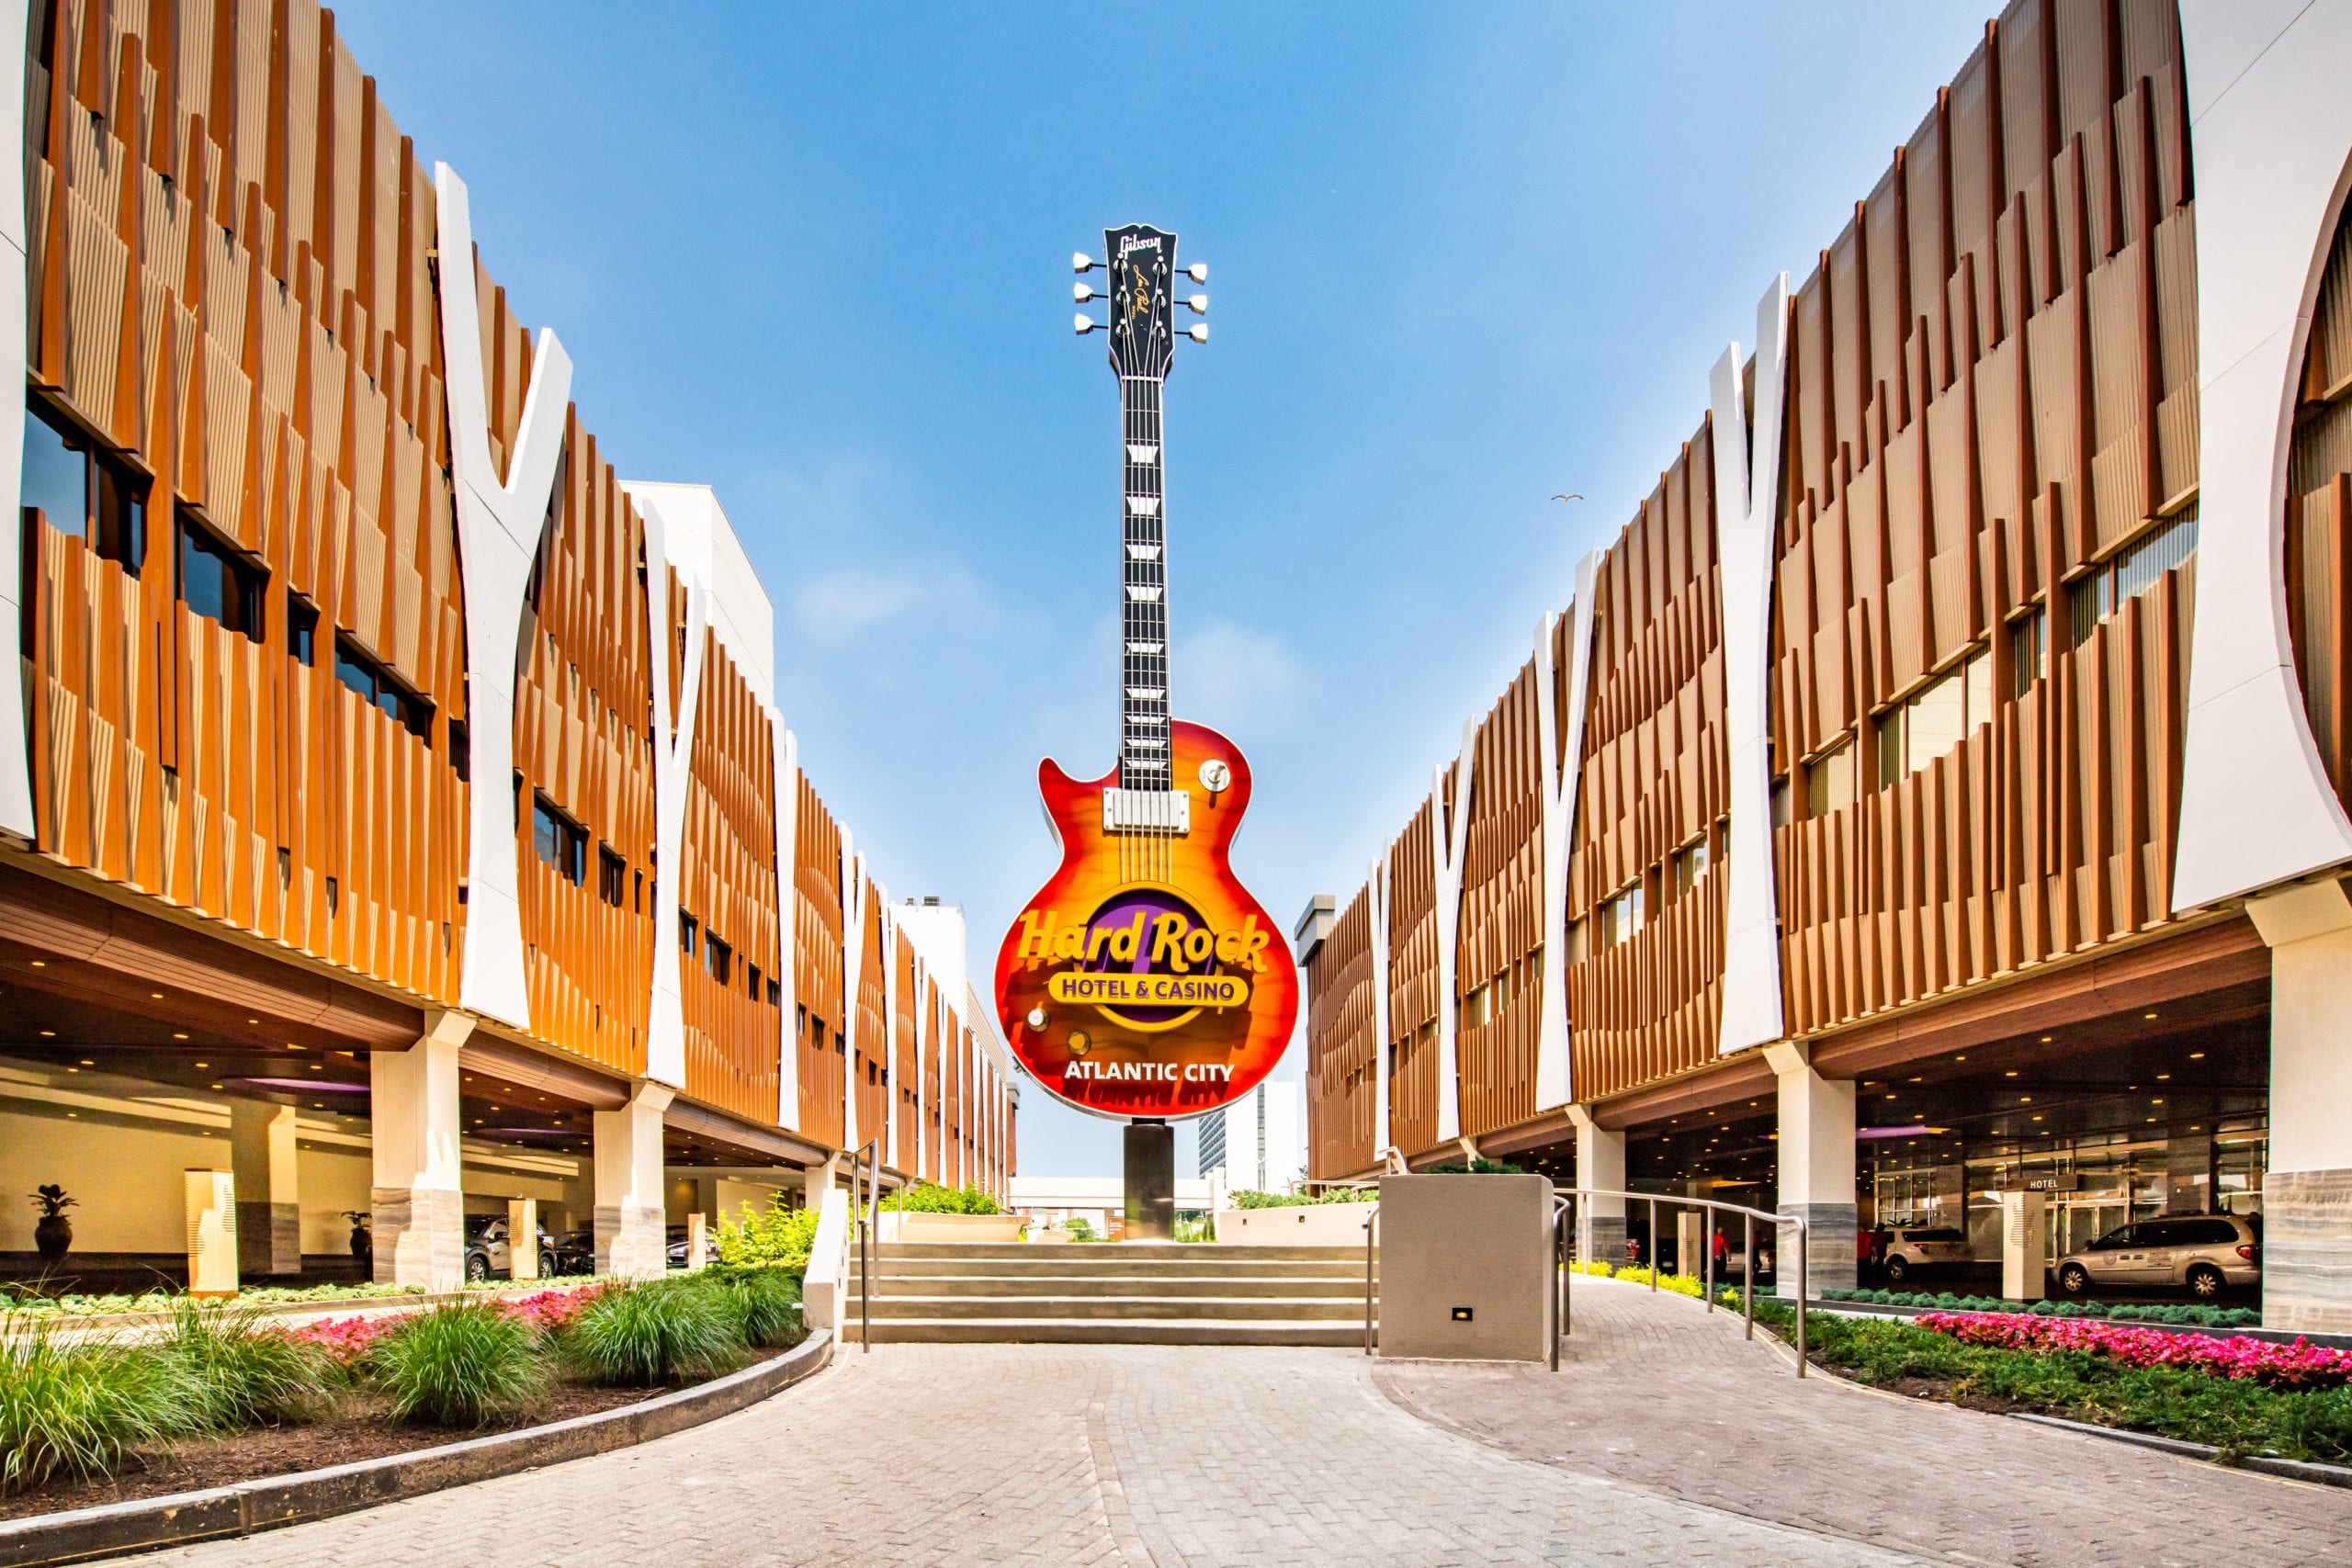 EDSA Hard Rock Hotel & Casino Atlantic City courtyard with guitar